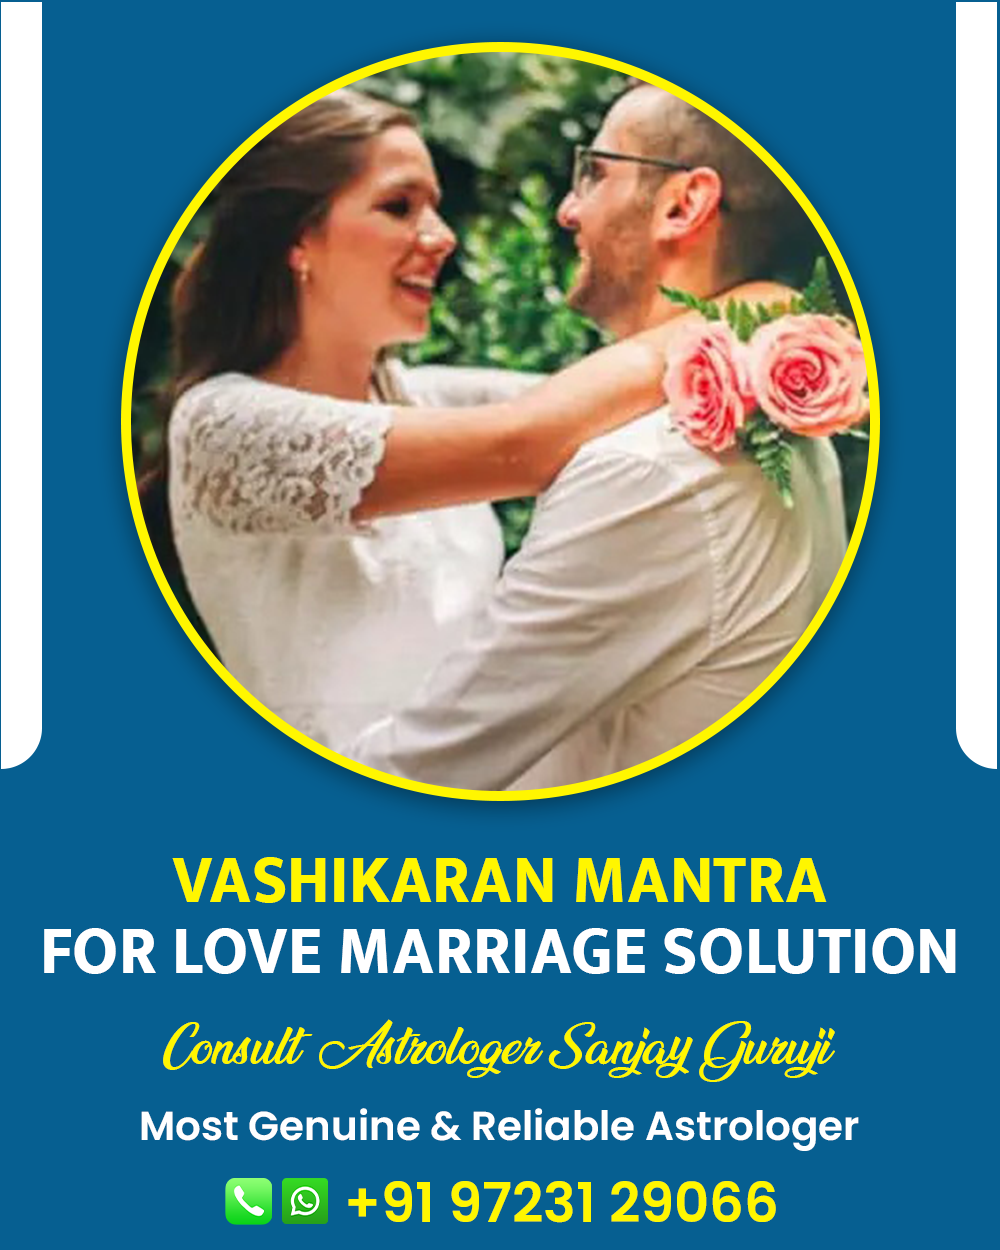 Vashikaran Mantra for Love Marriage